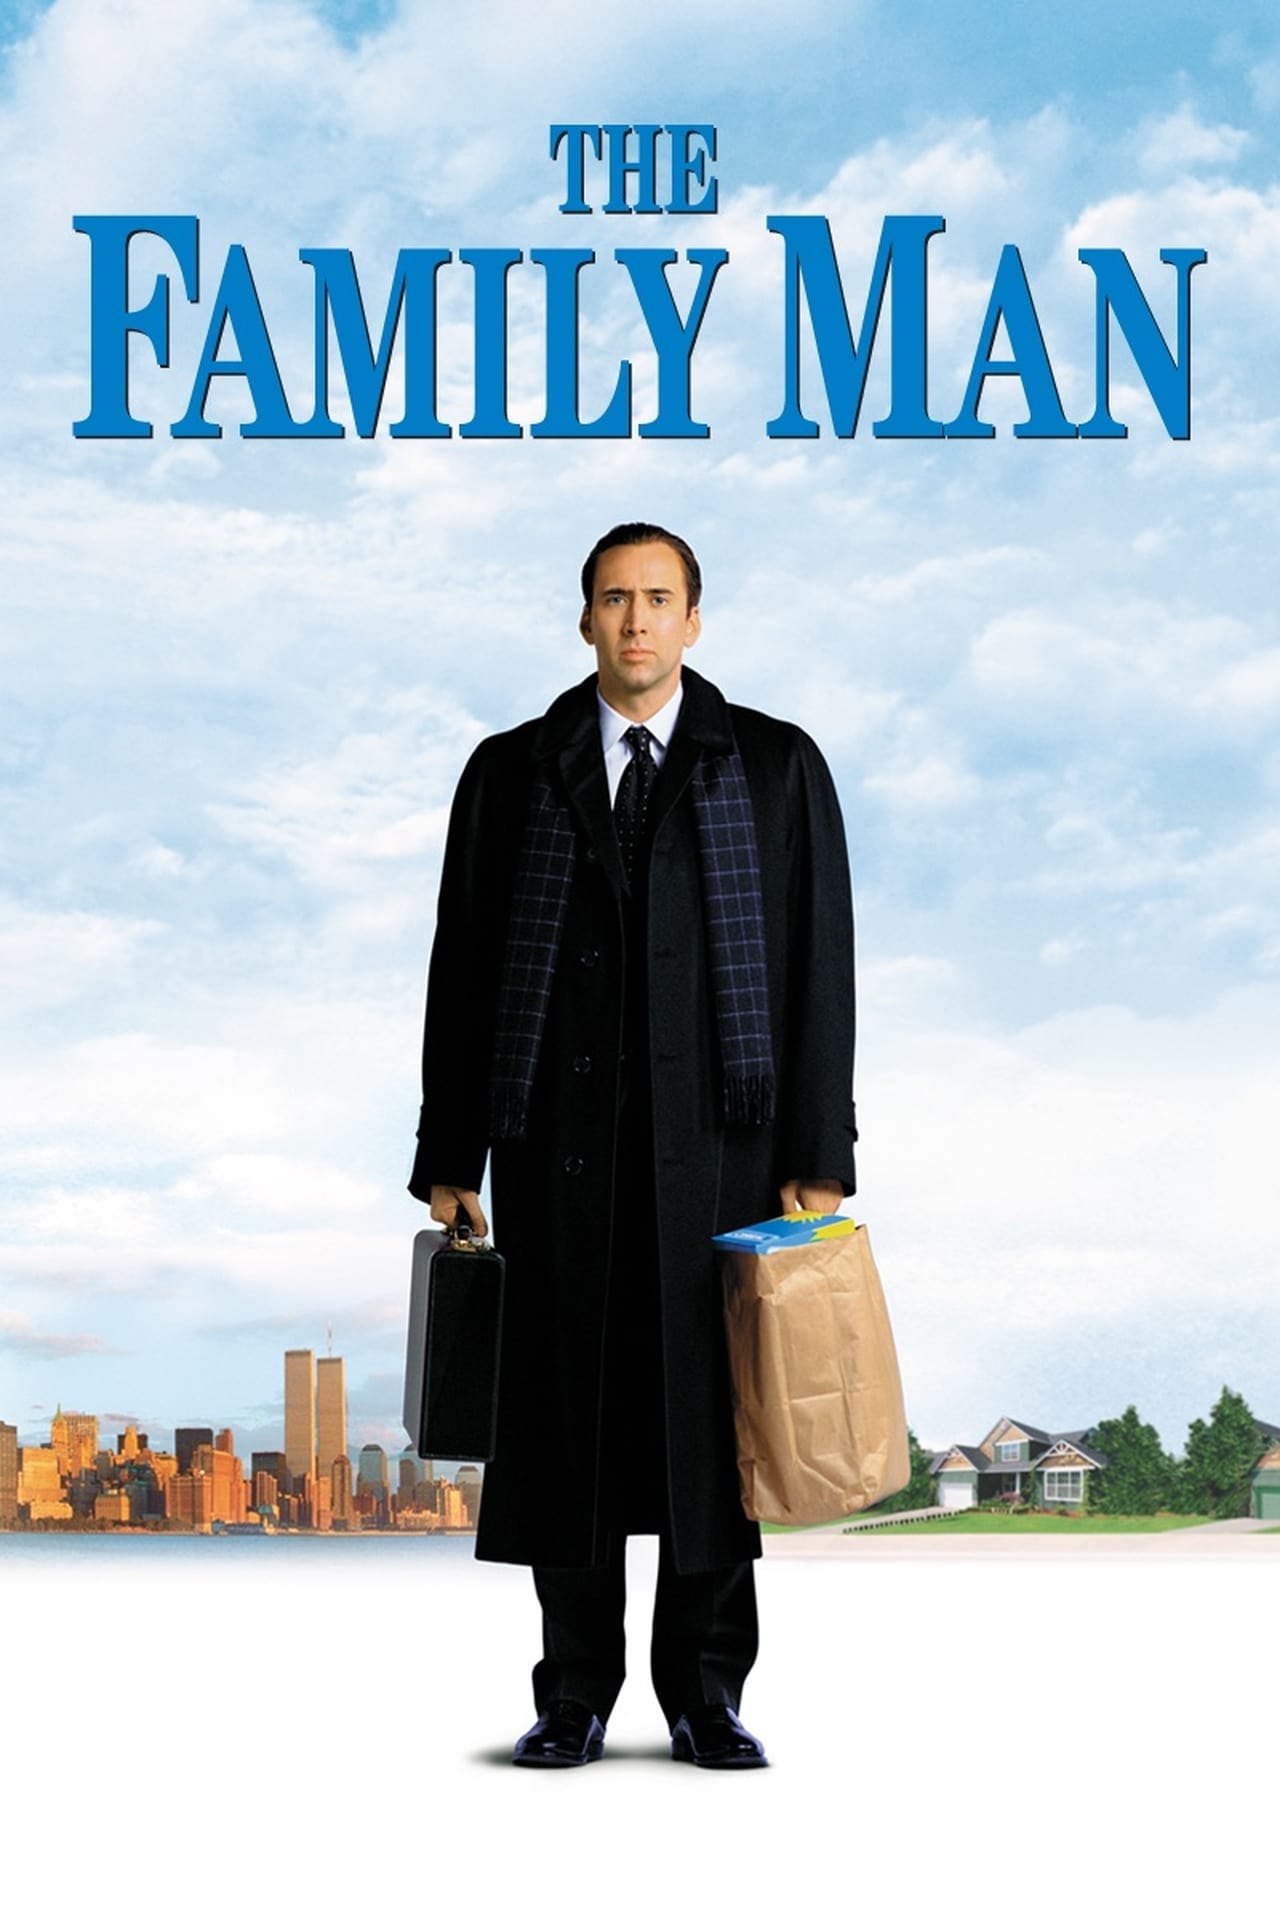 The Family Man Movie Synopsis, Summary, Plot & Film Details